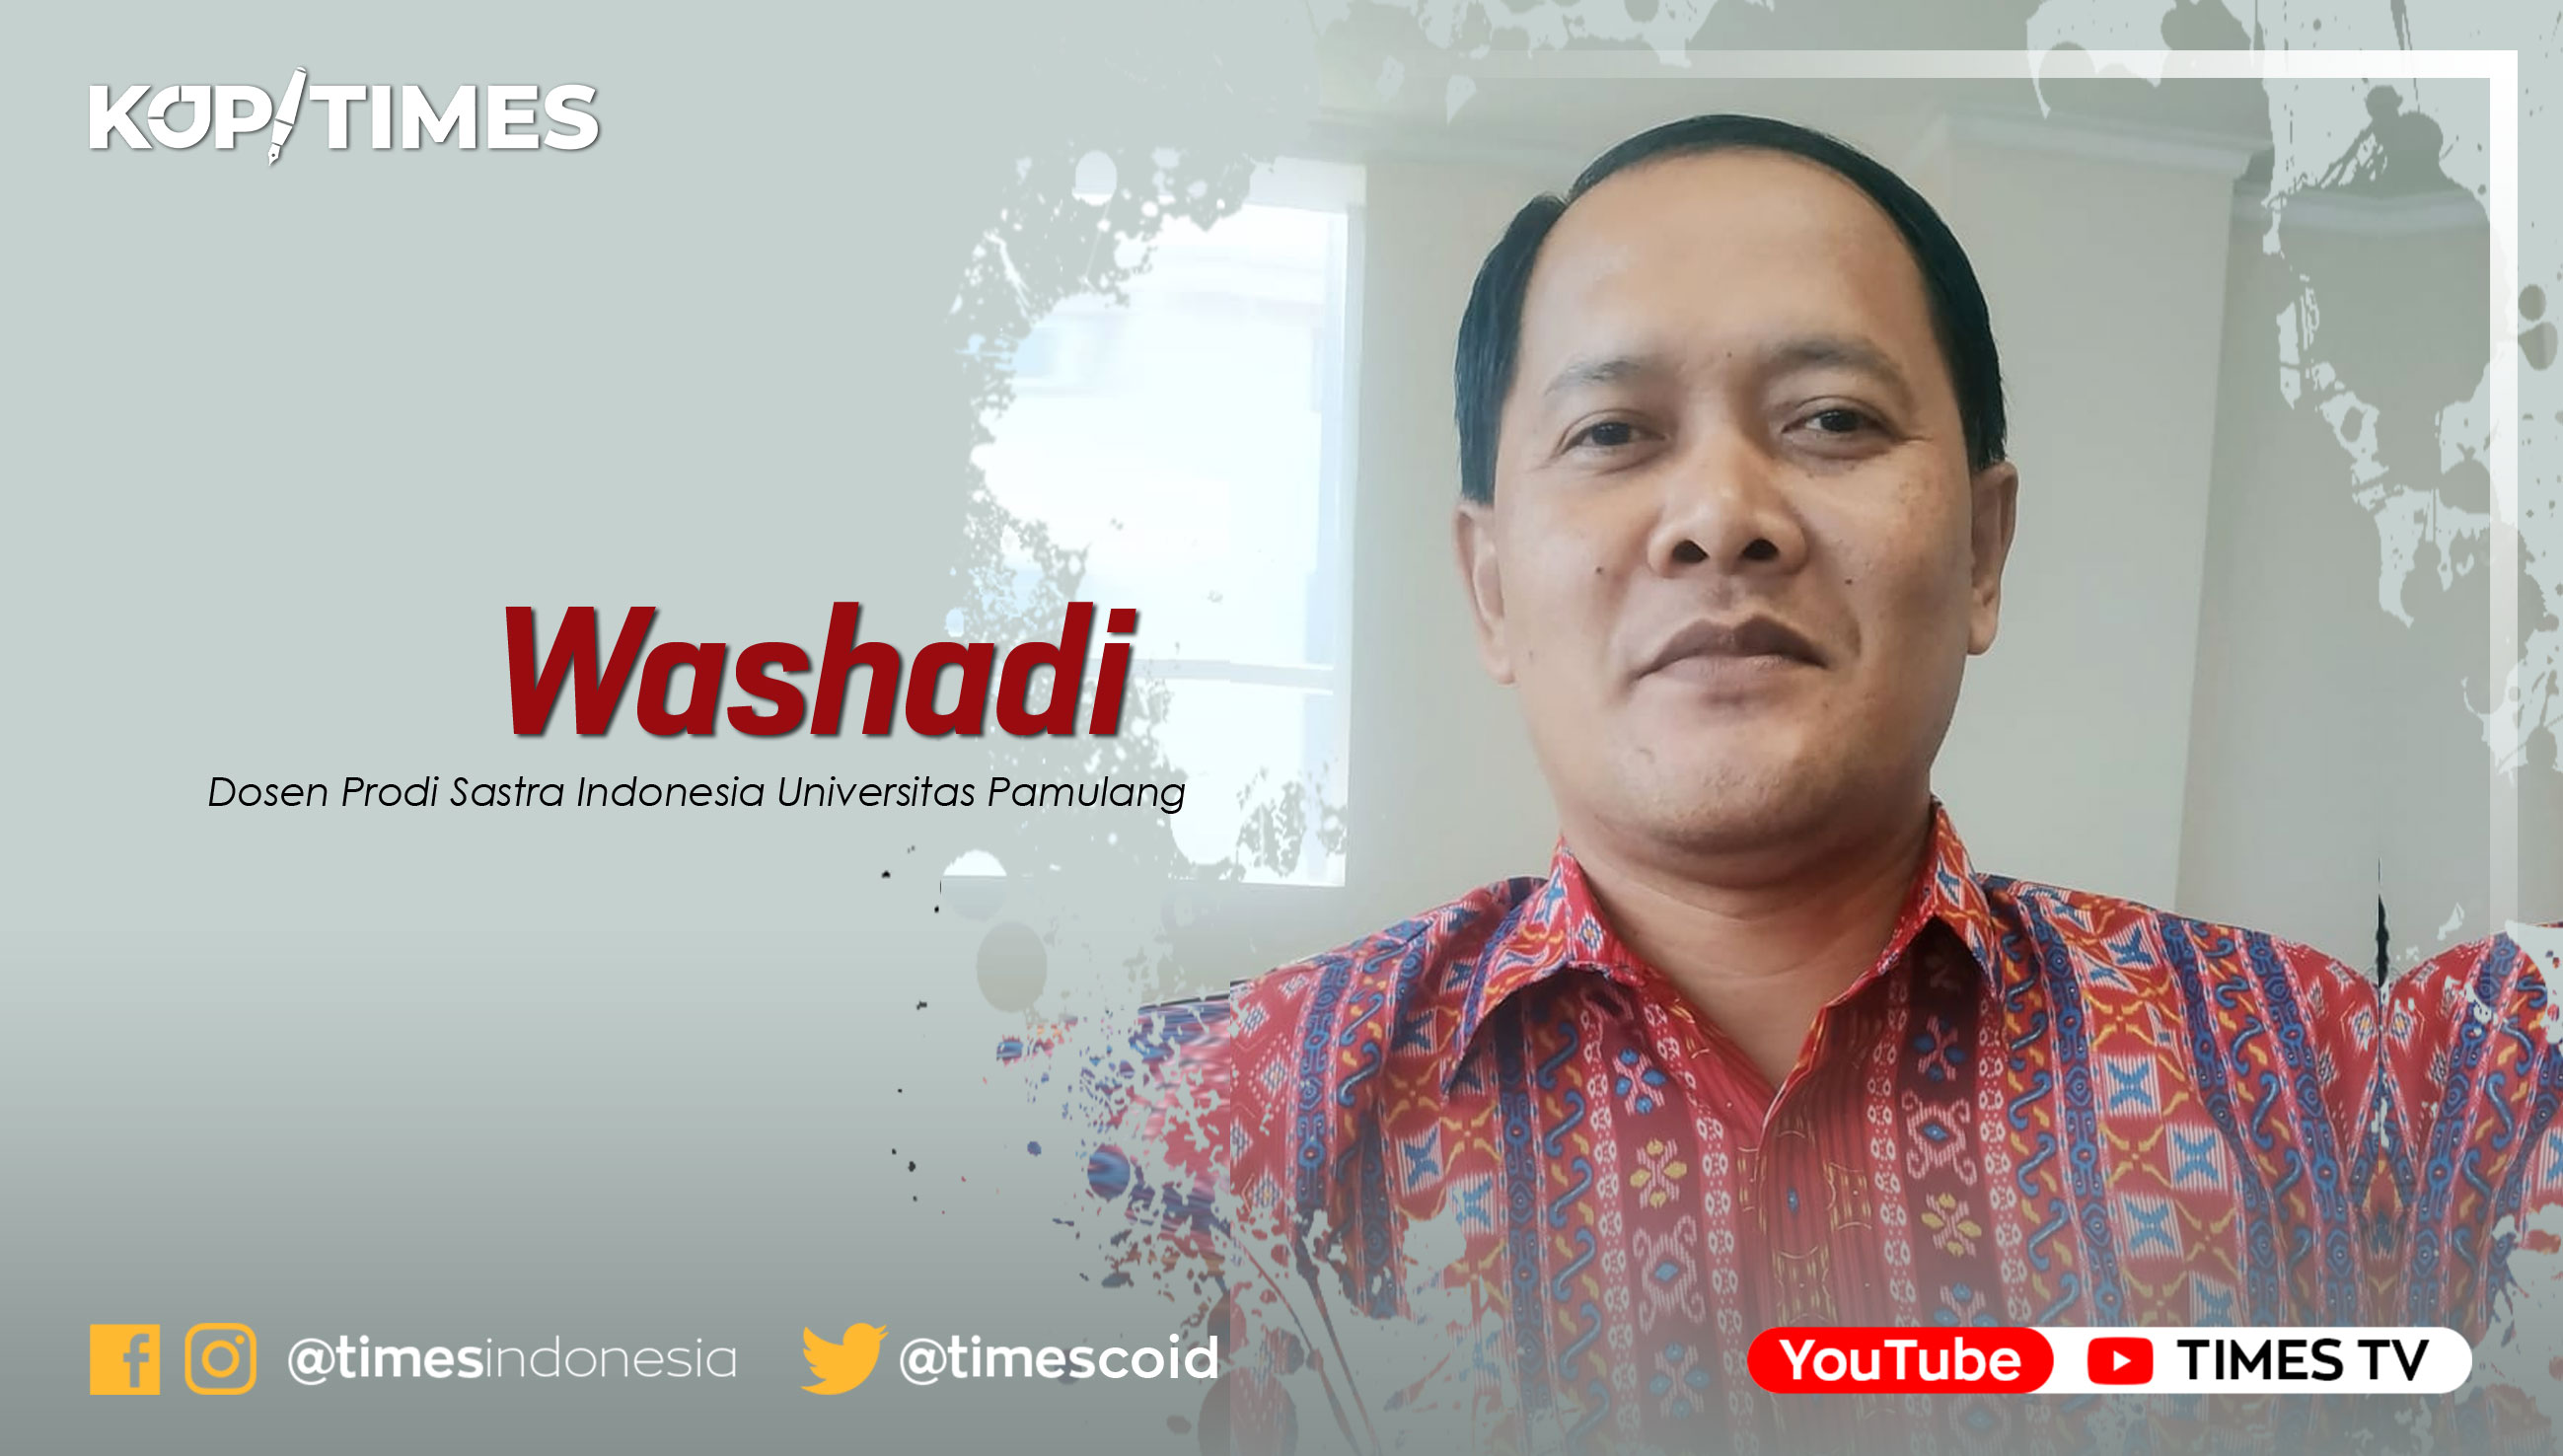 Washadi, Dosen Prodi Sastra Indonesia, Universitas Pamulang. (Grafis: TIMES Indonesia)